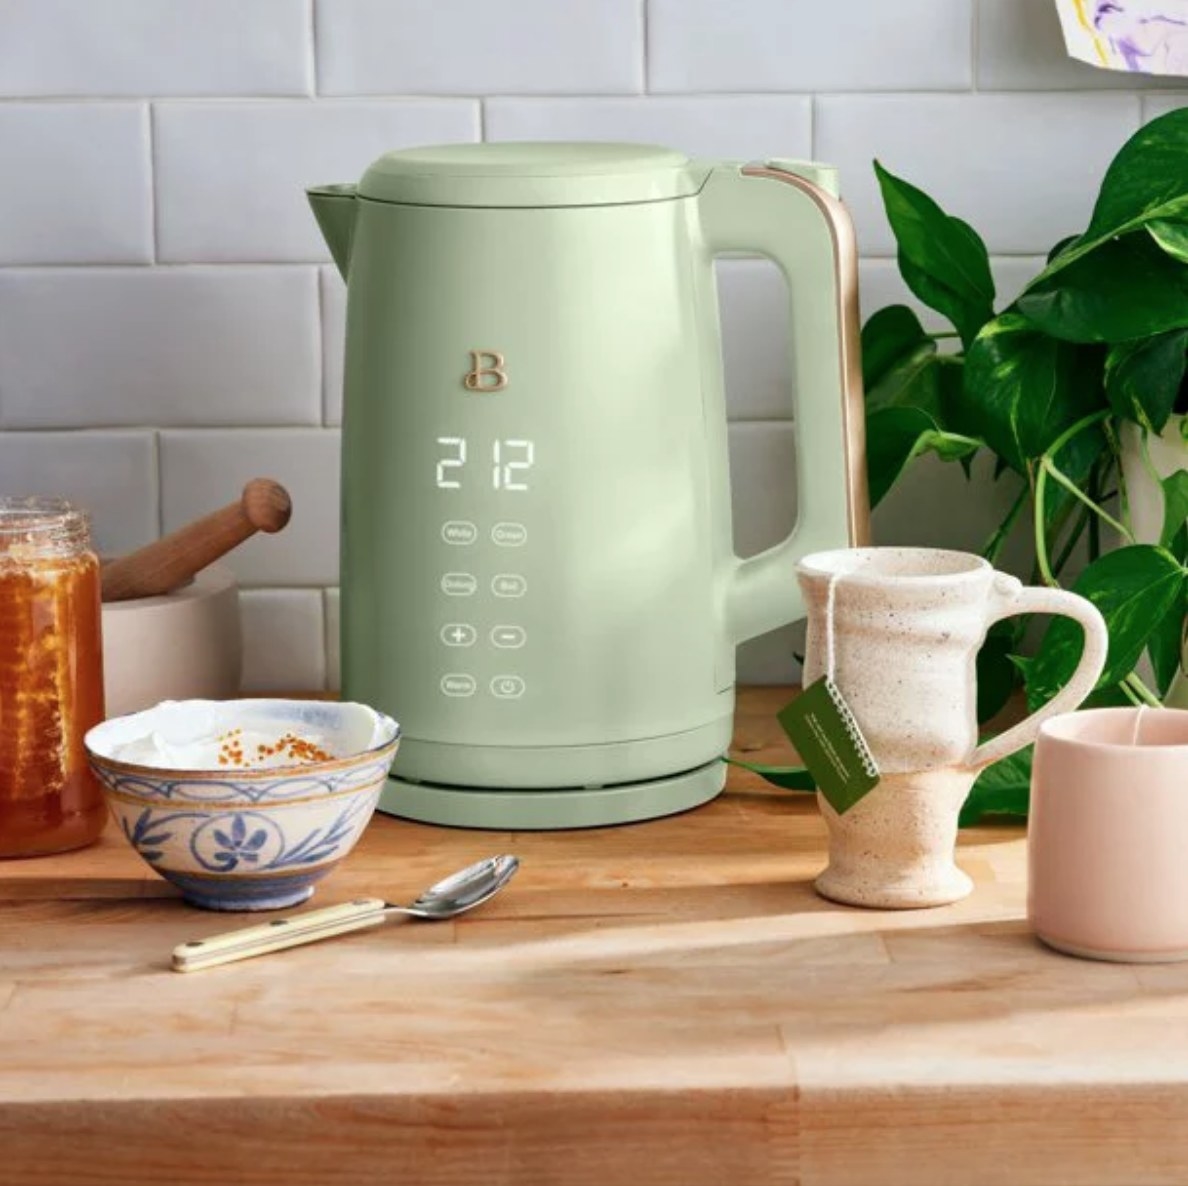 Sage green electric tea kettle on countertop